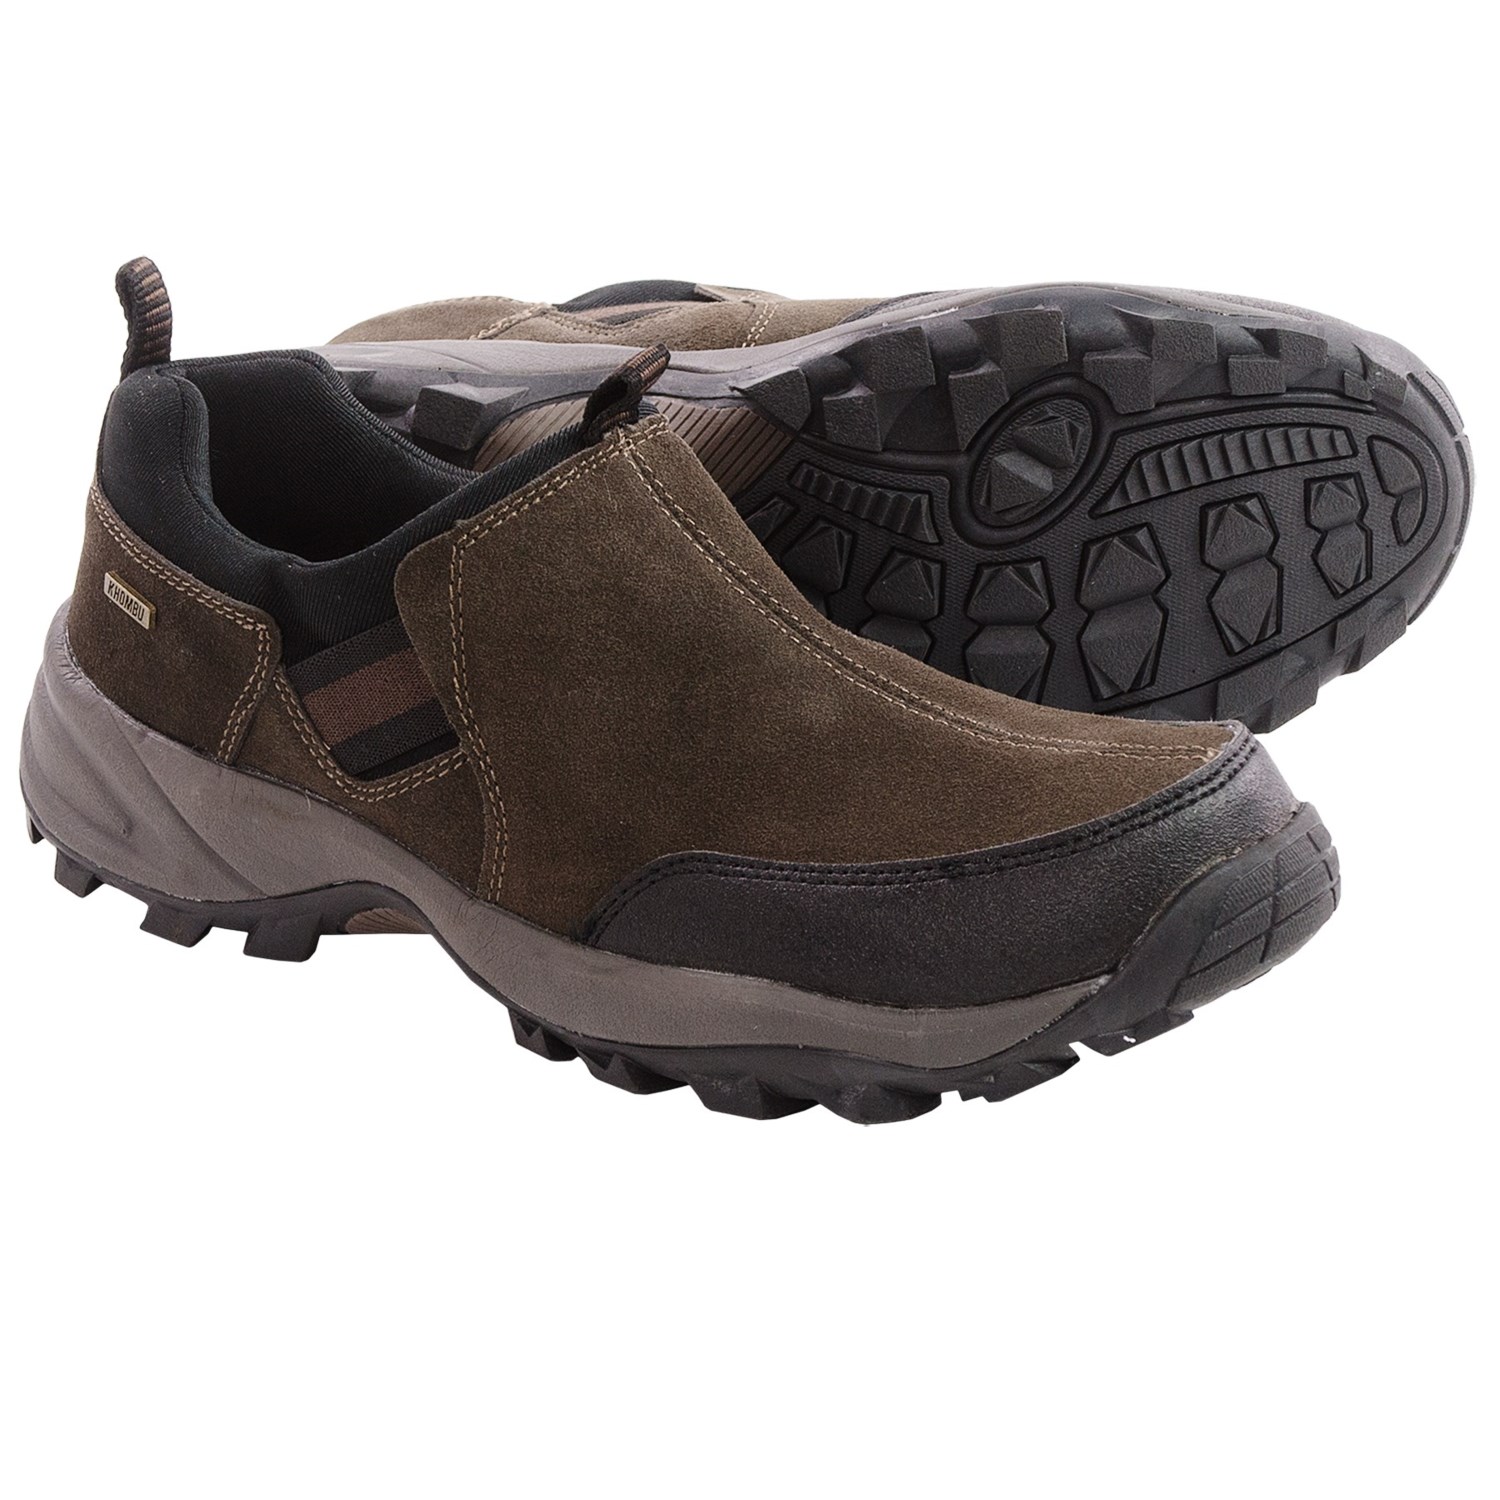 Khombu Tamarack Shoes (For Men) 9116H - Save 69%